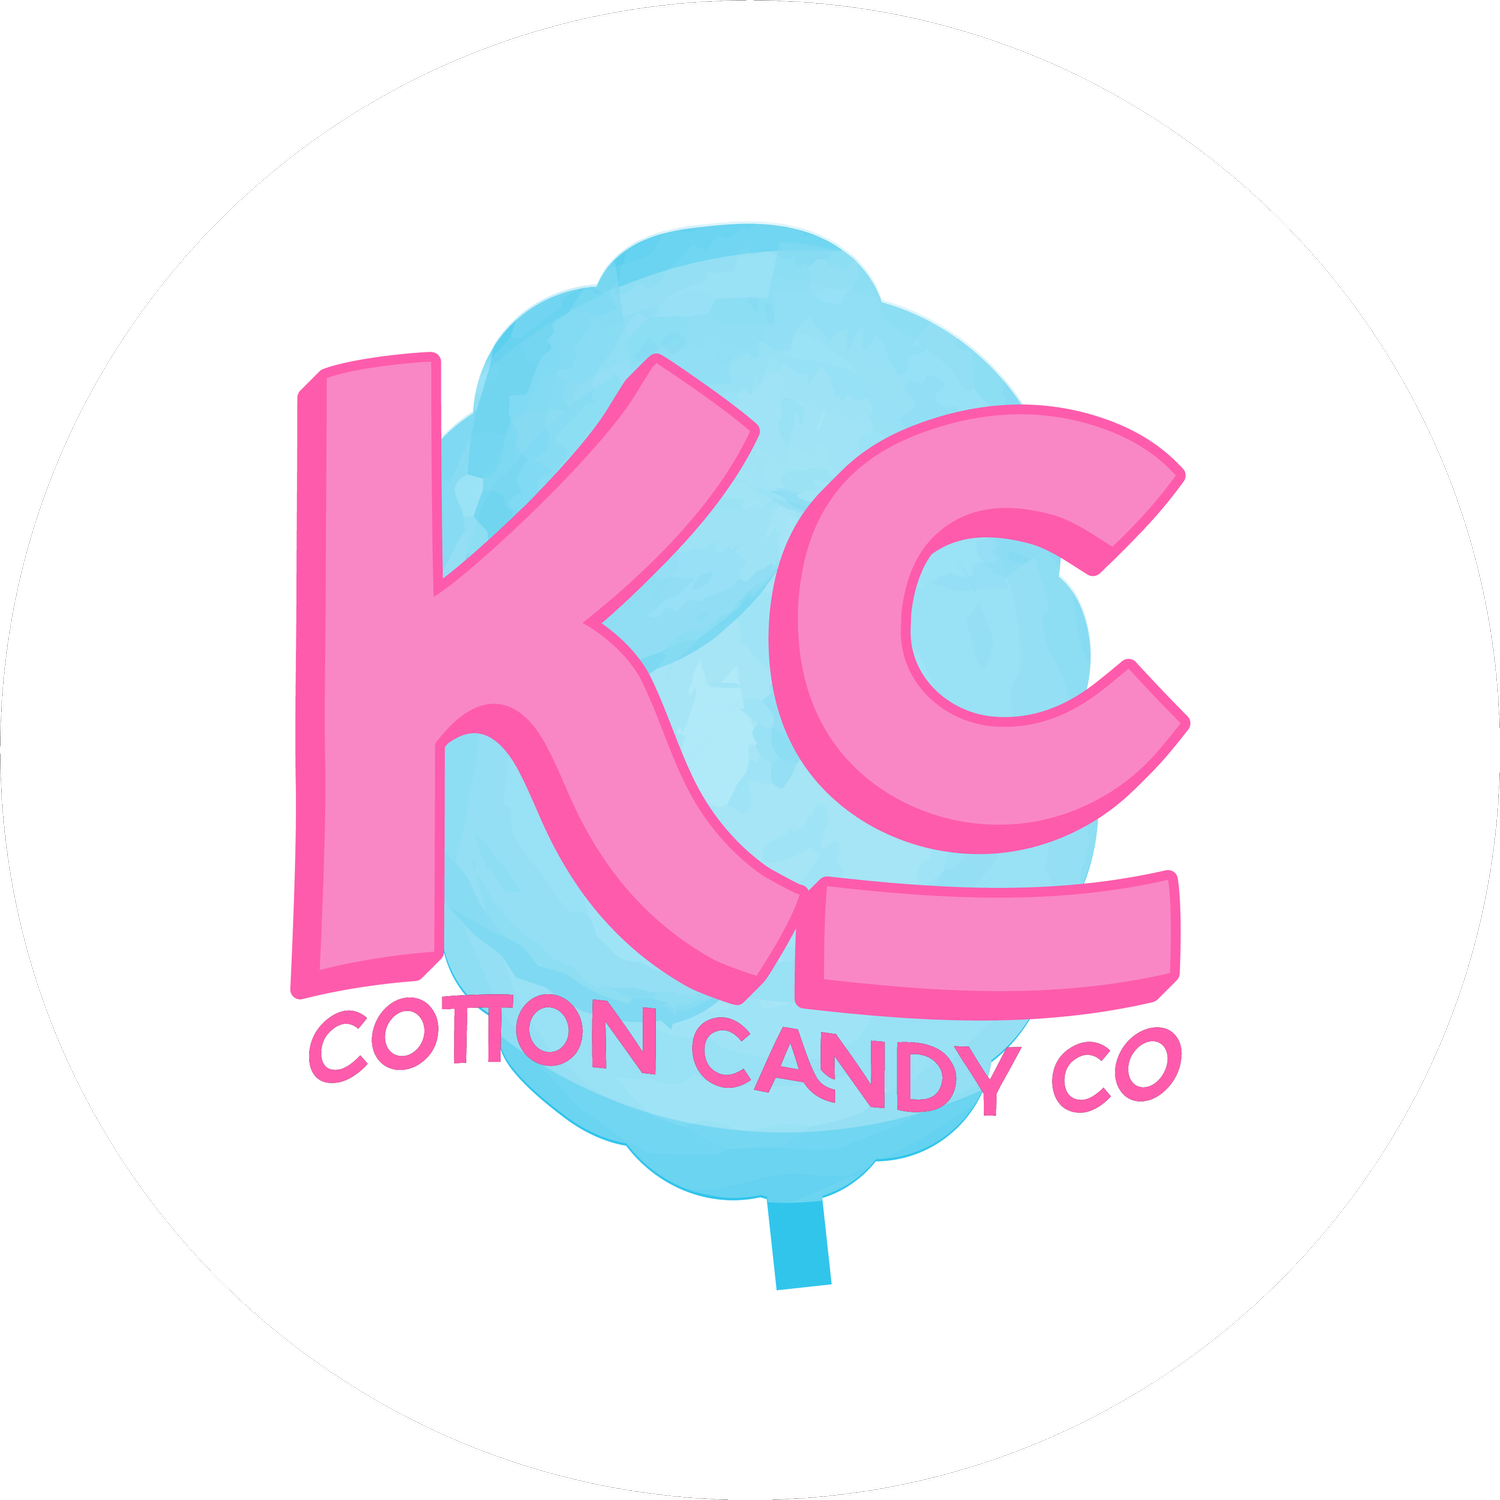 KC Cotton Candy Co